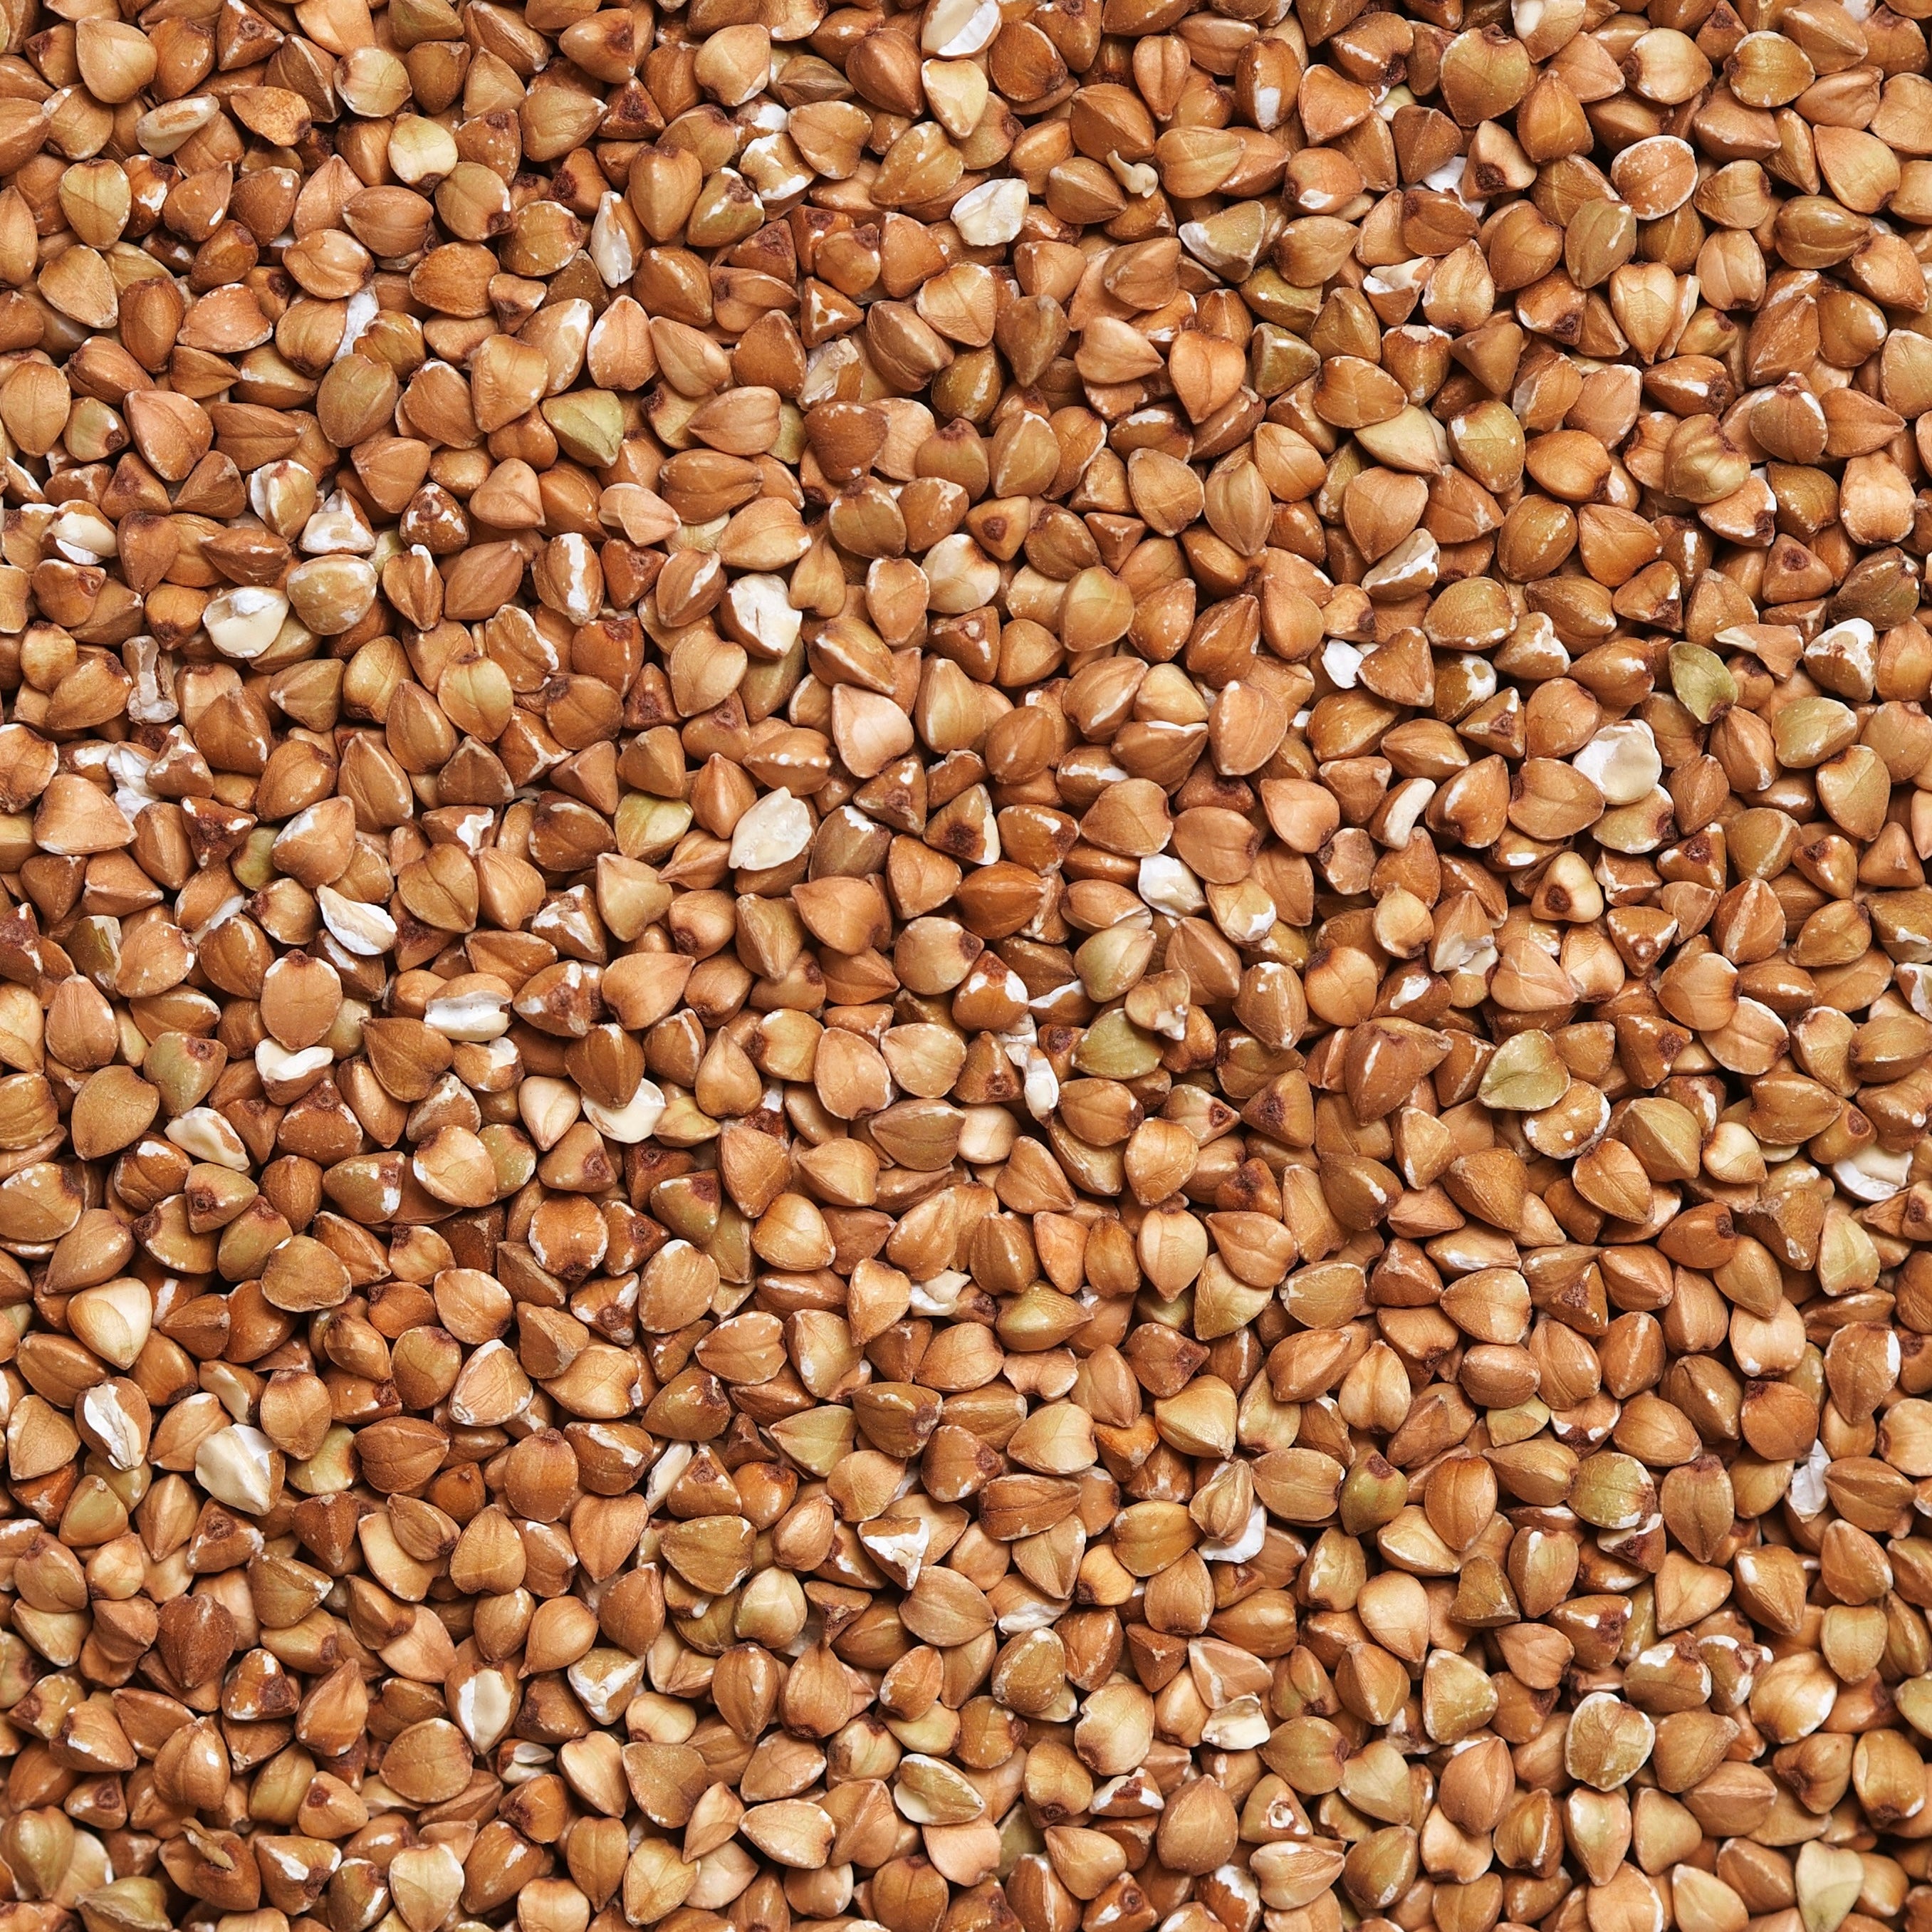 Organic Unroasted Buckwheat